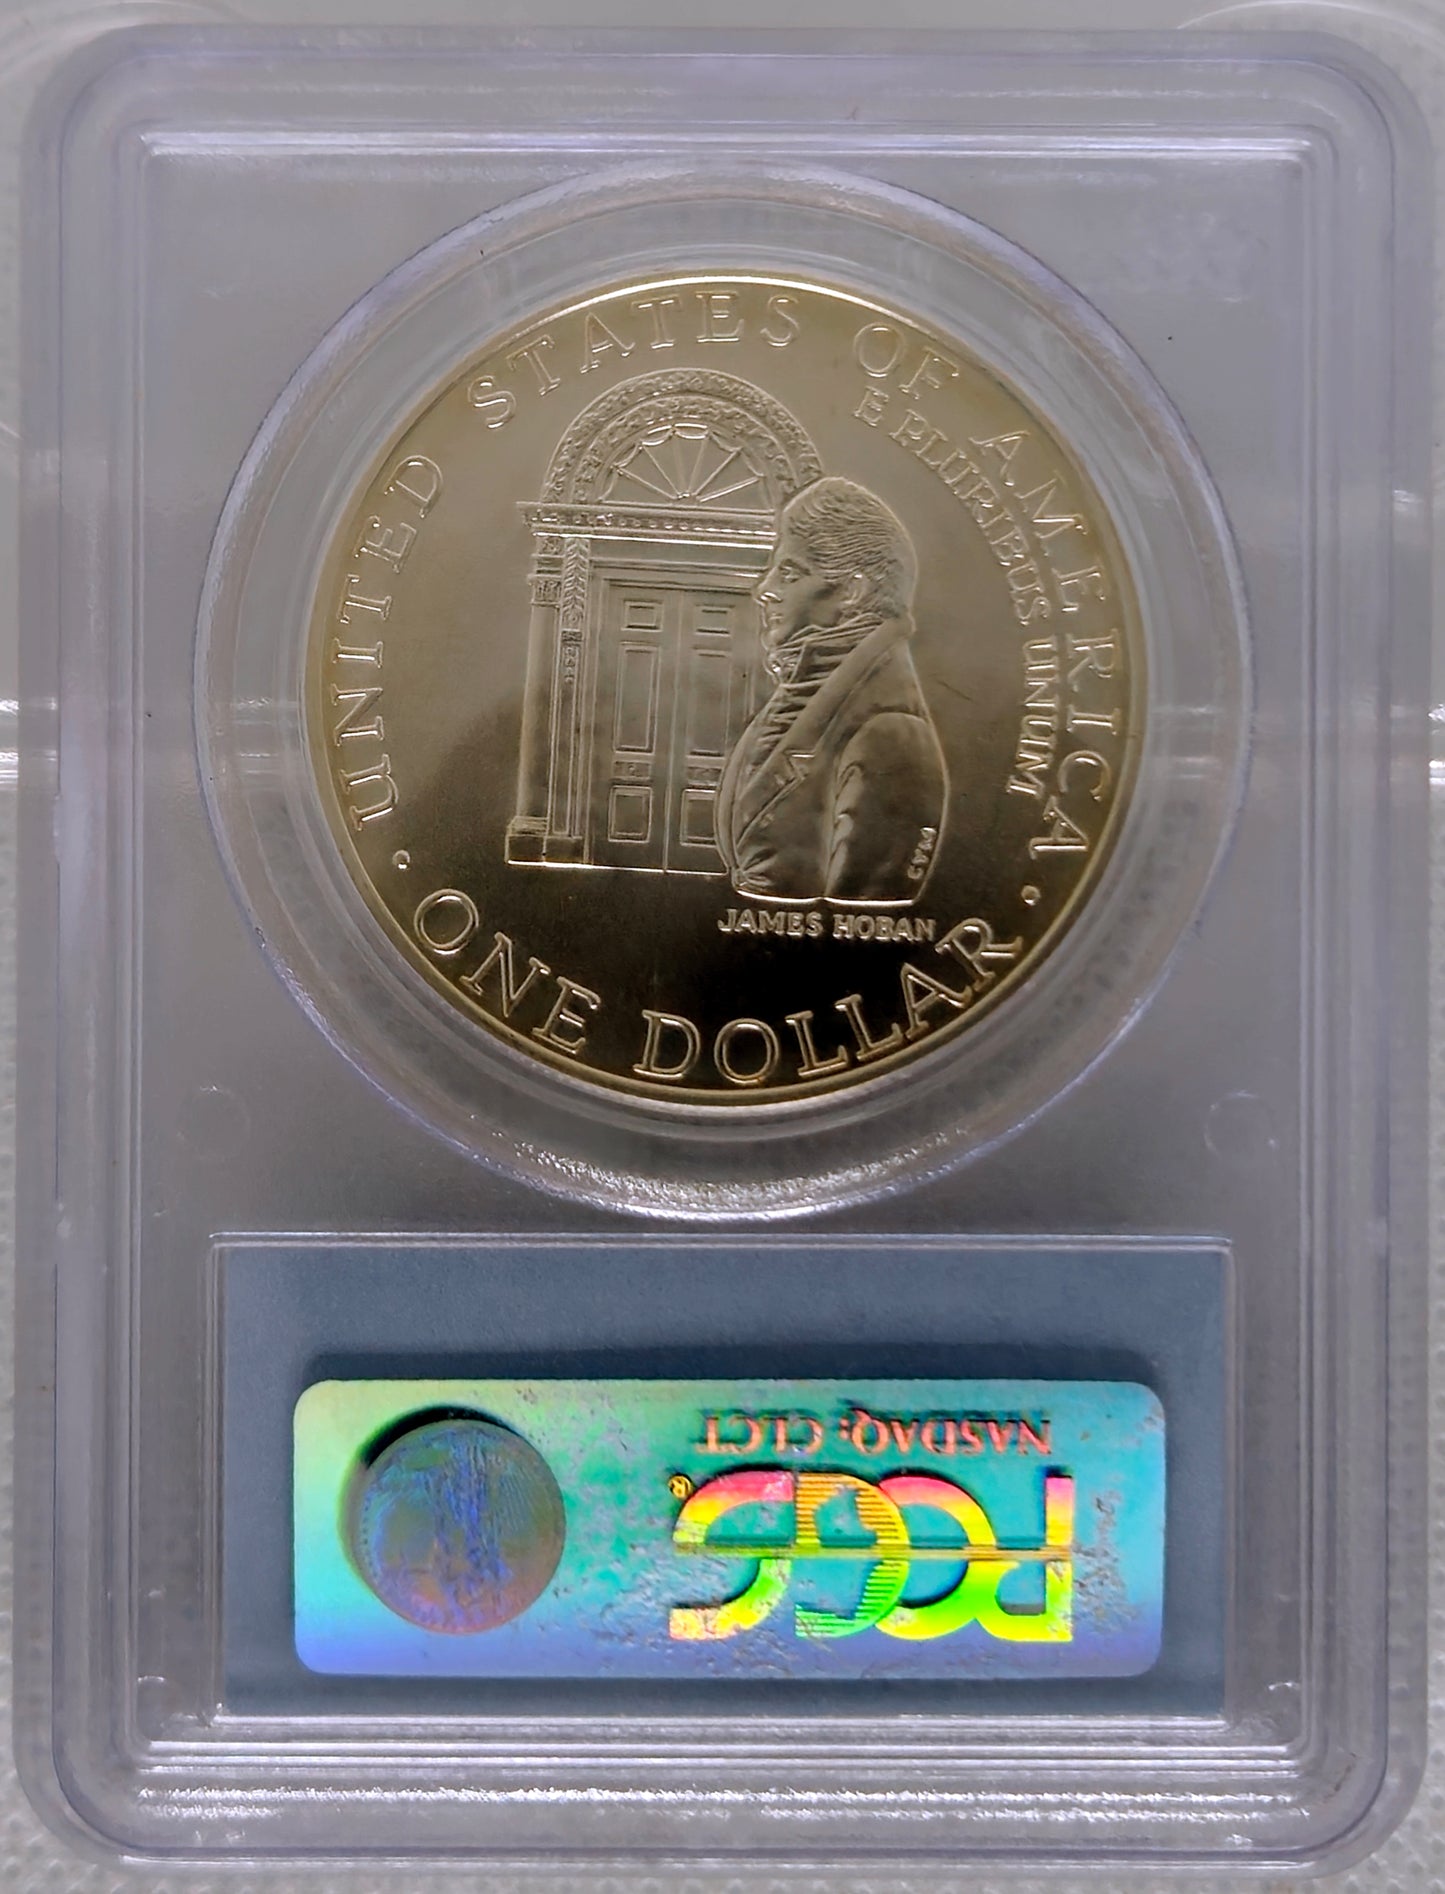 1992-D White House PCGS MS 69 Commemorative Silver Dollar